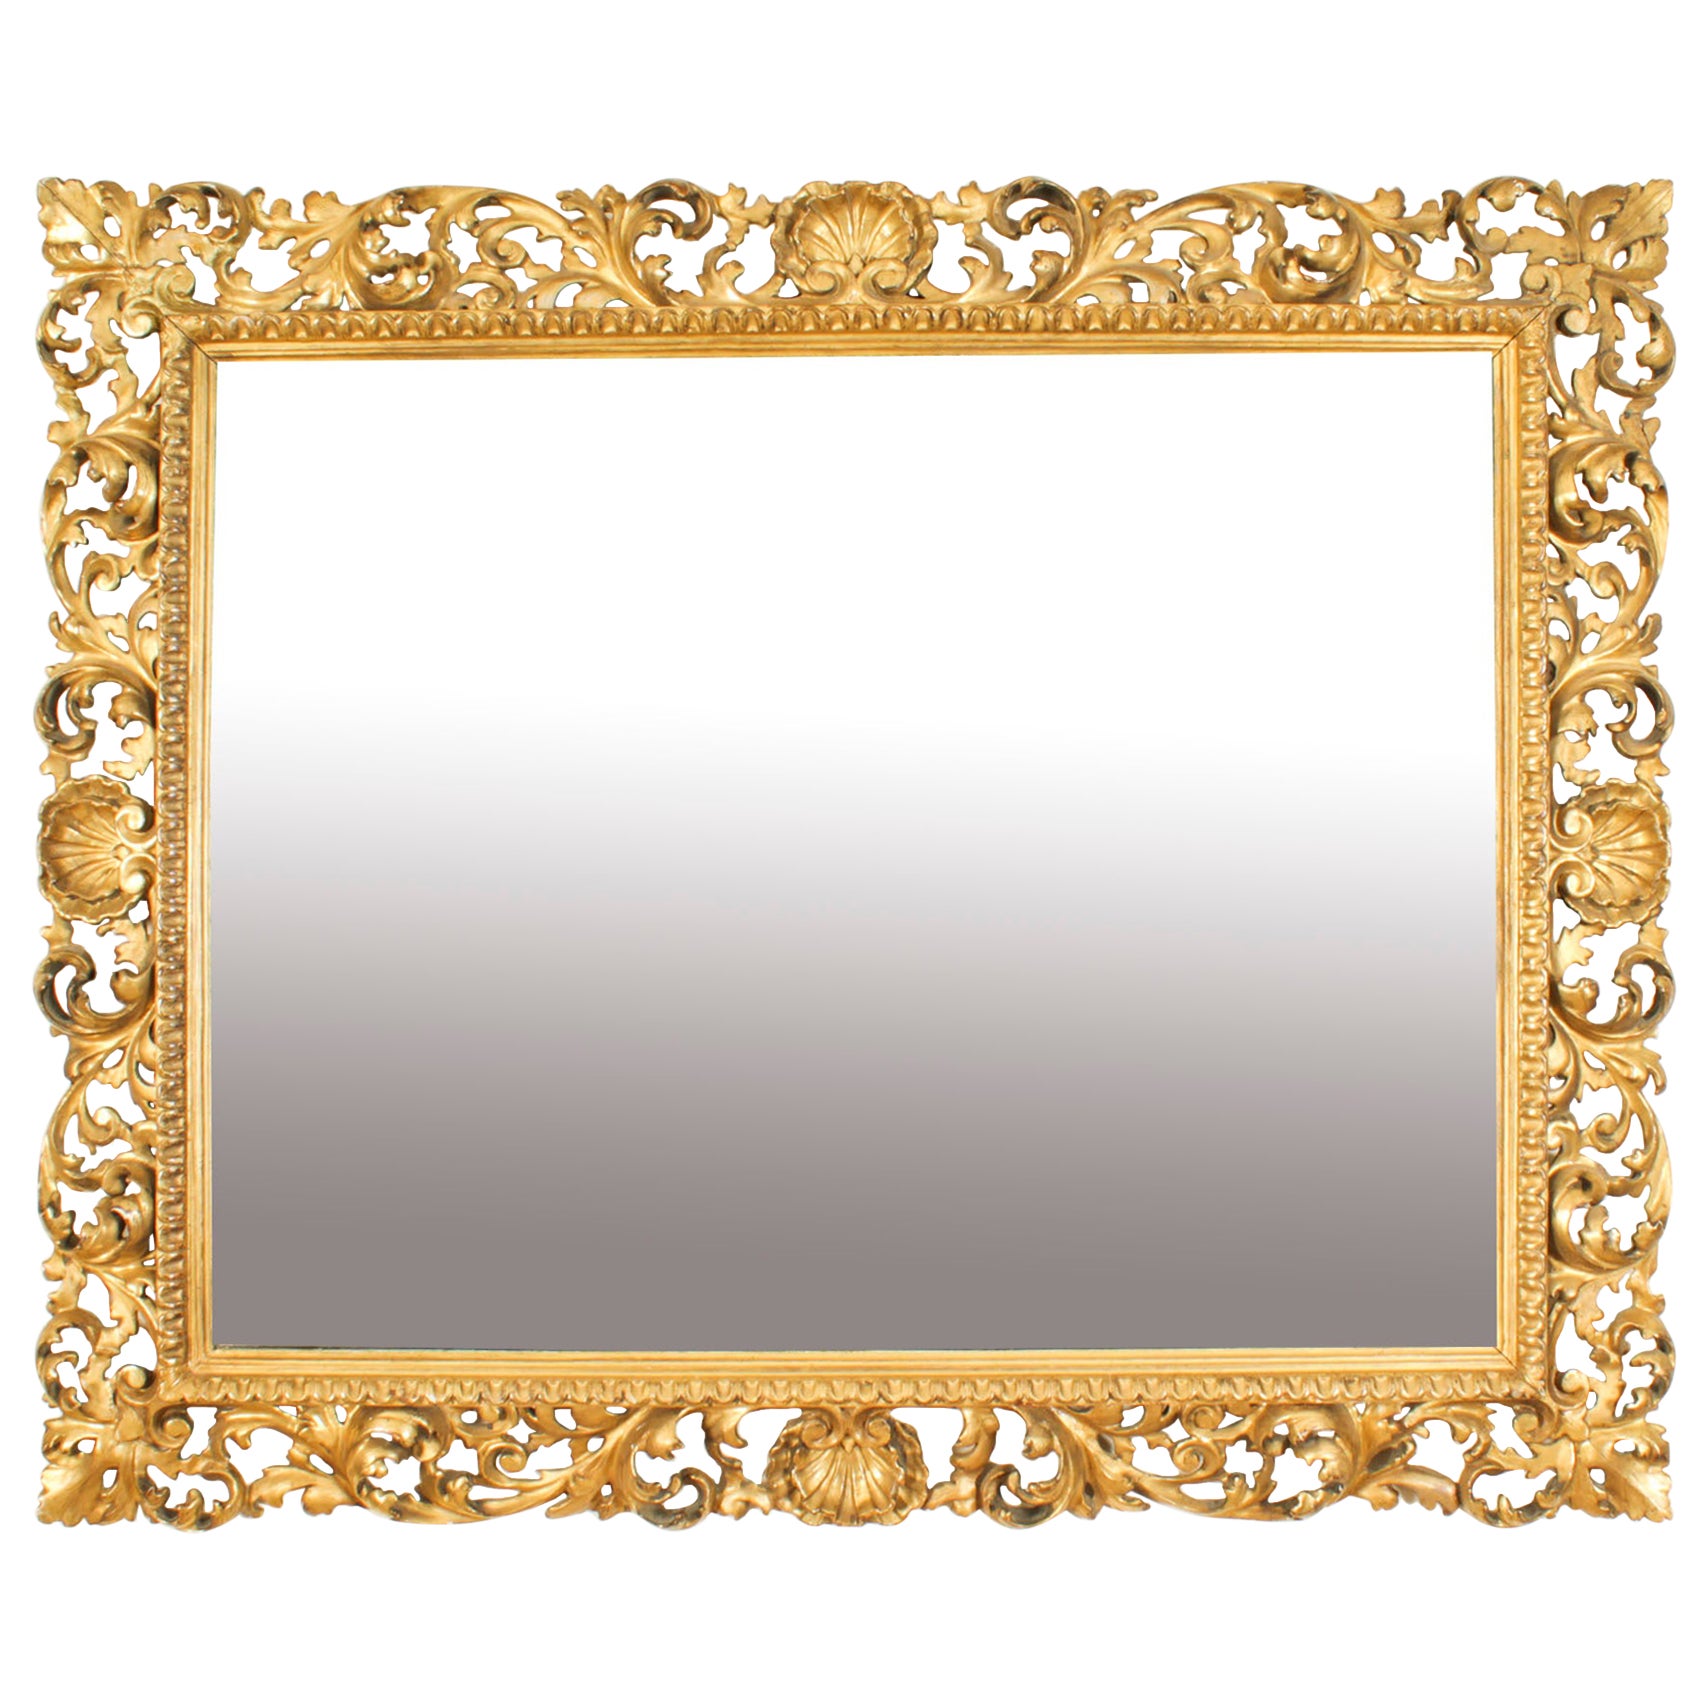 Antique Italian Giltwood Florentine Overmantle Mirror 19th Century - 86x102cm For Sale